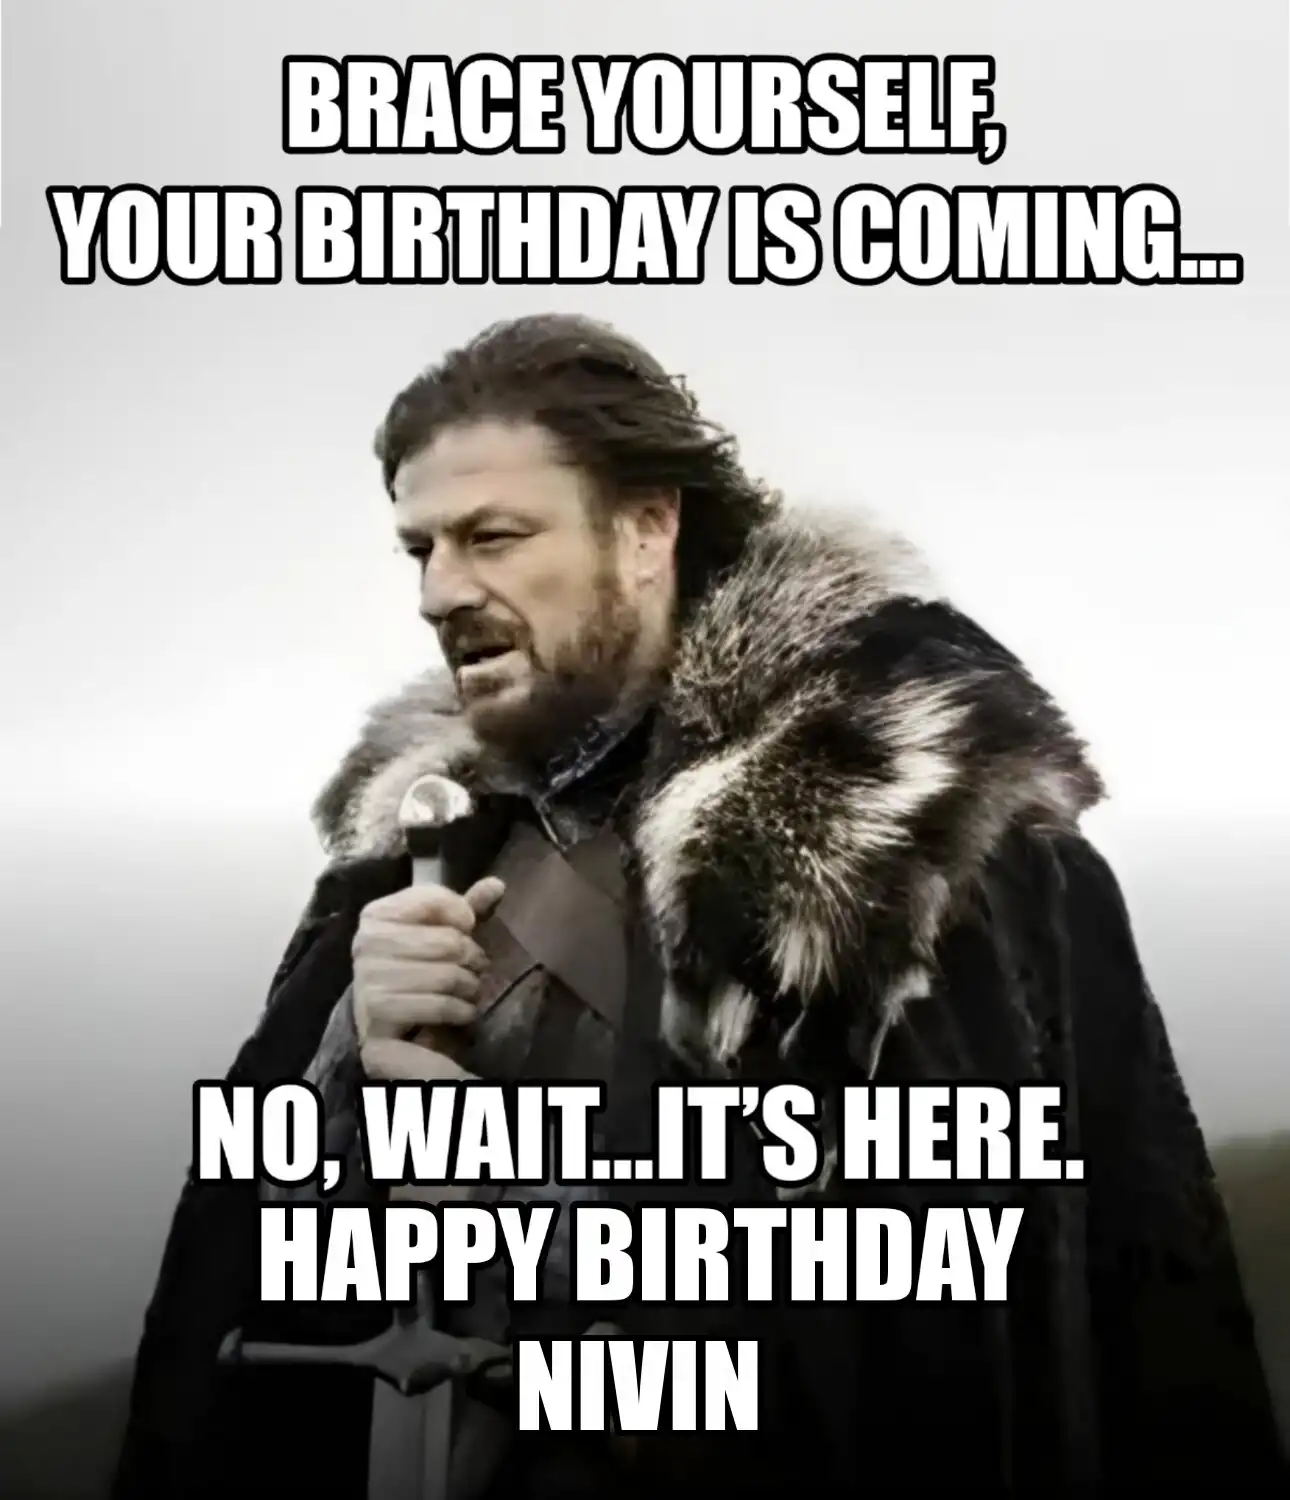 Happy Birthday Nivin Brace Yourself Your Birthday Is Coming Meme